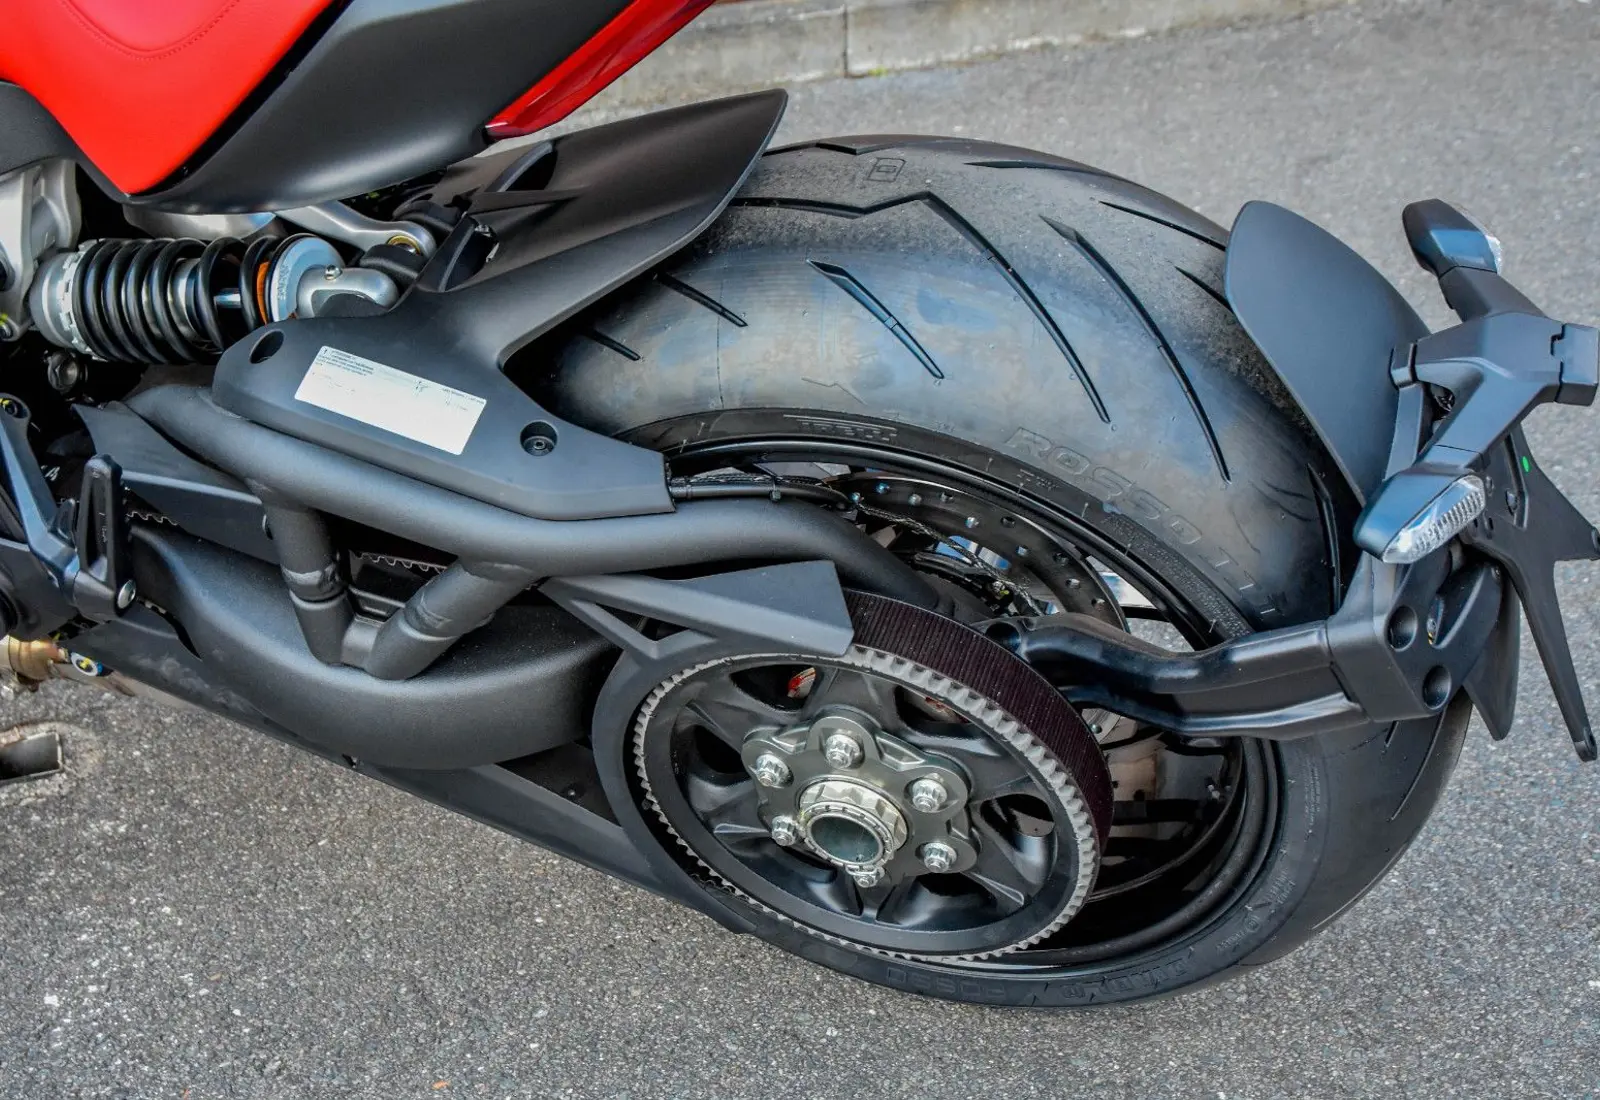 Ducati X-Diavel Nera * POLTRONA FRAU * 1 OF 500 * LIMITED ED - 44741